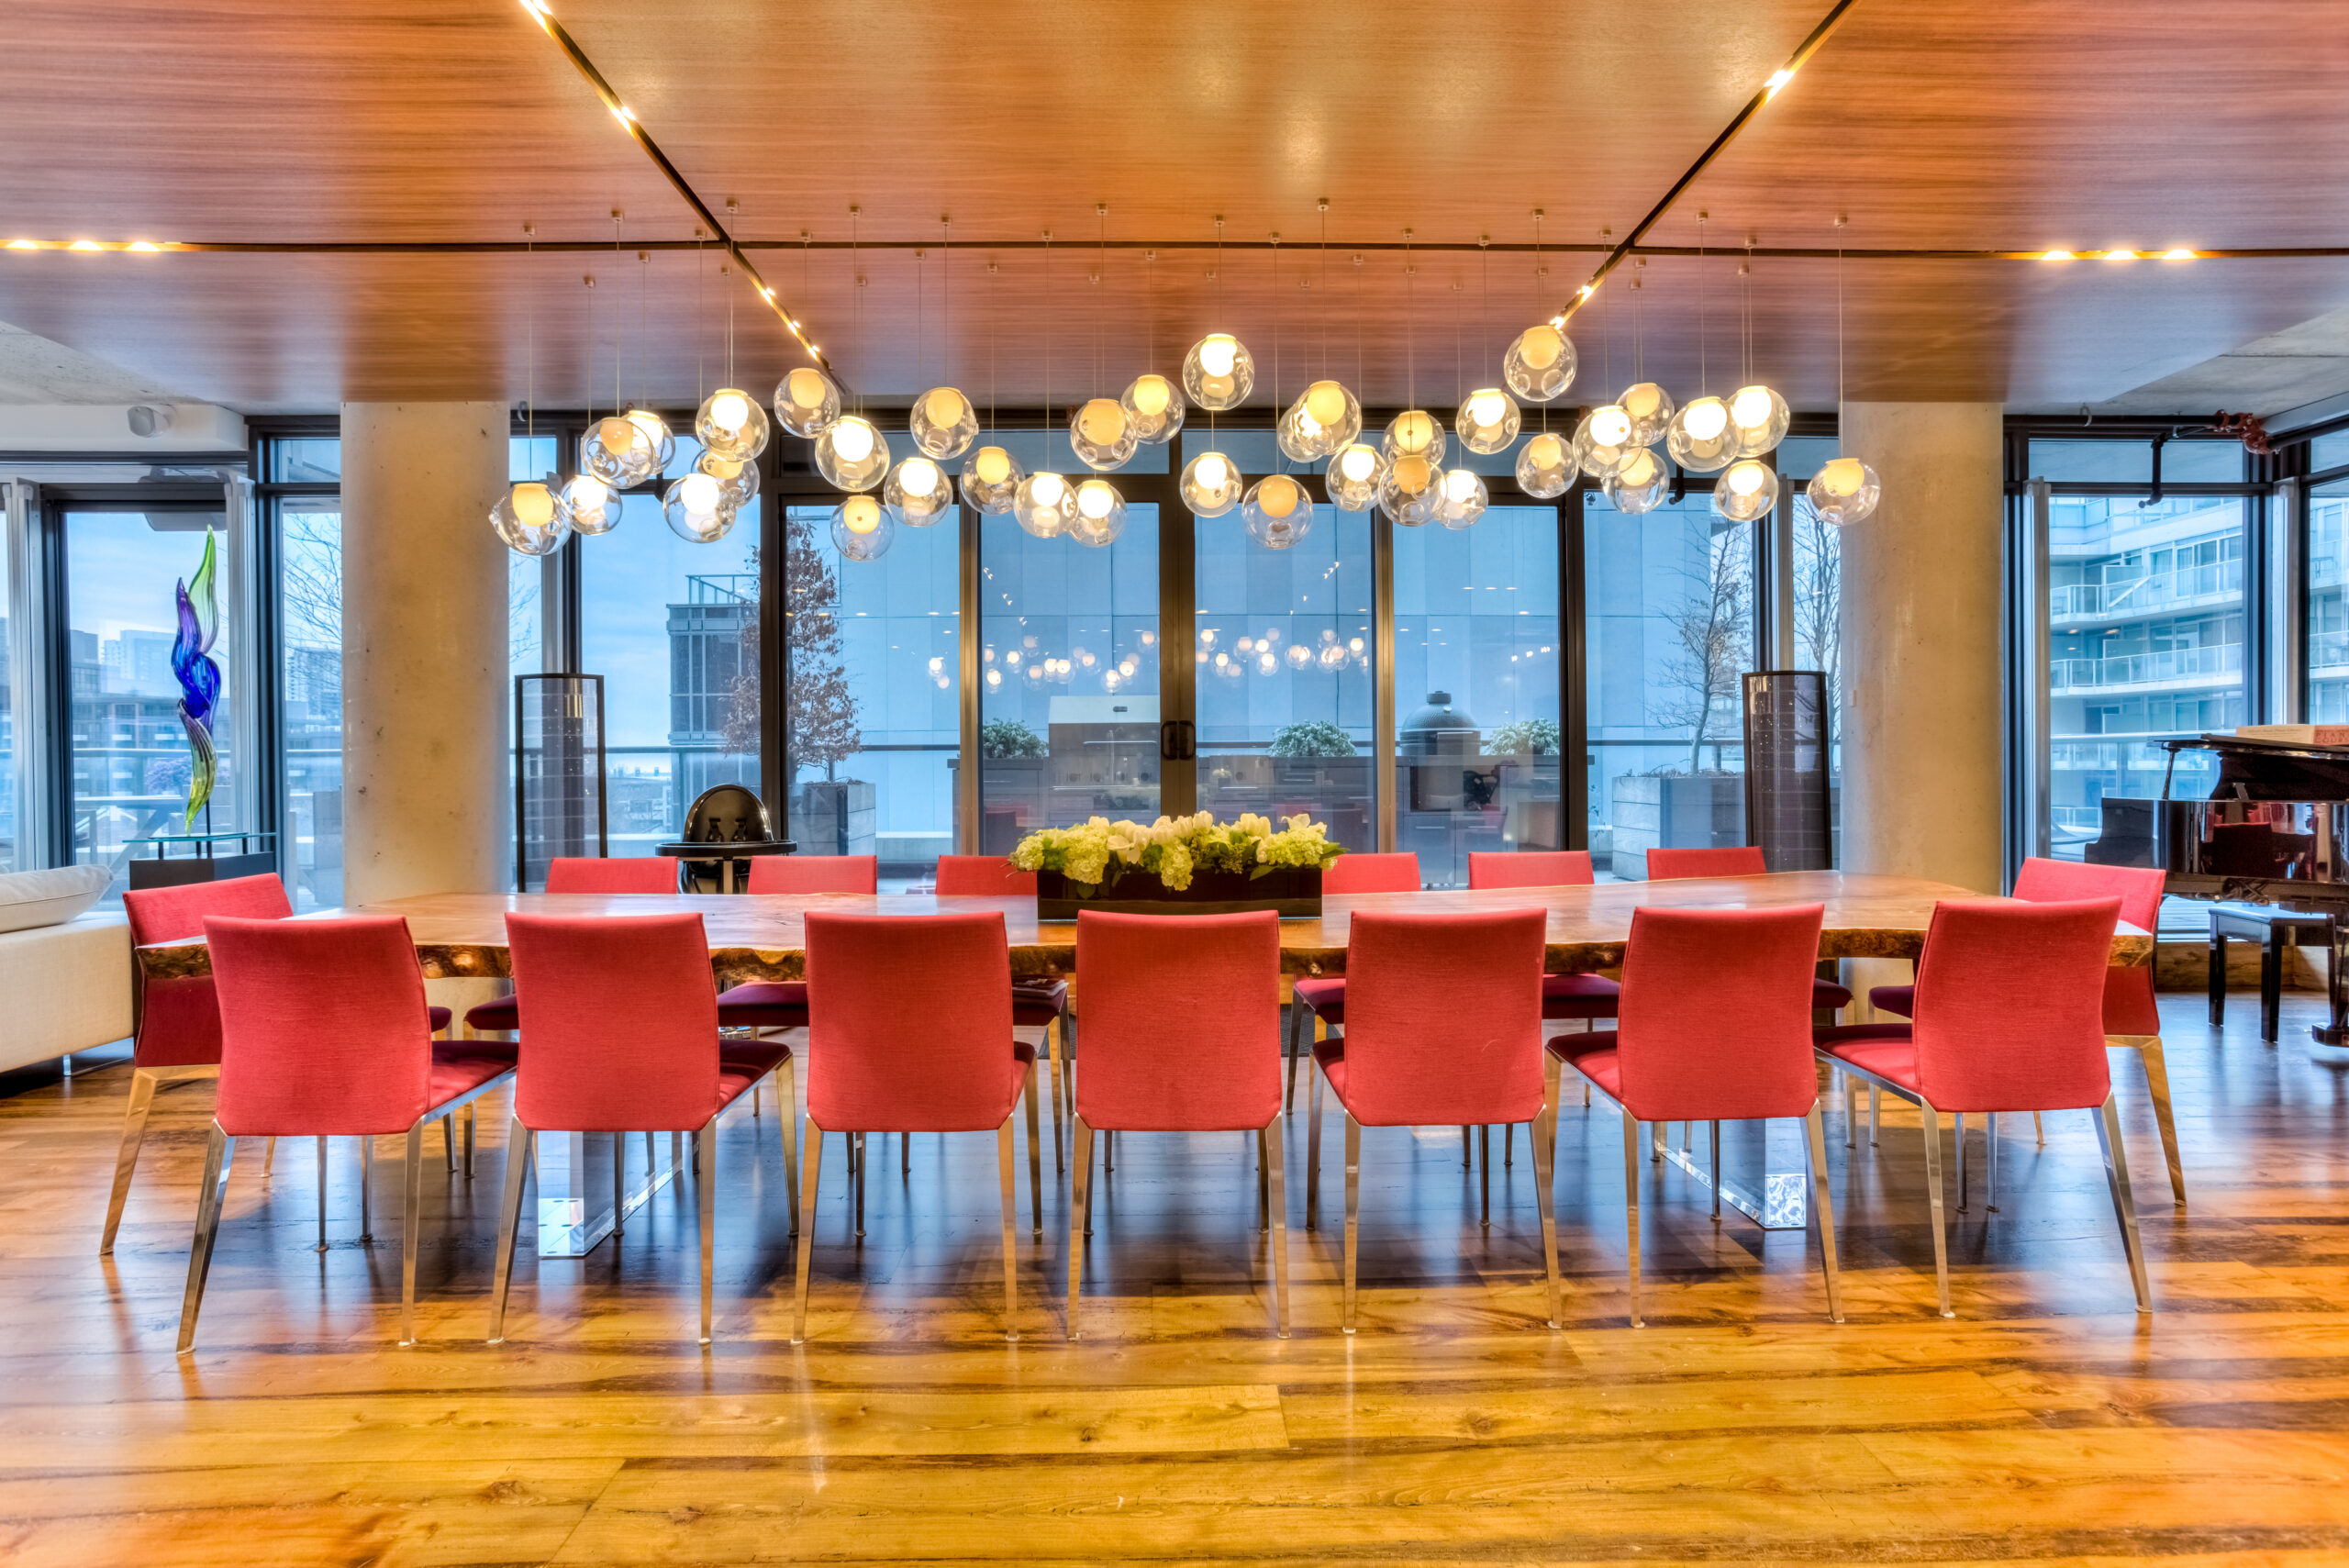 Dining room with custom lighting control